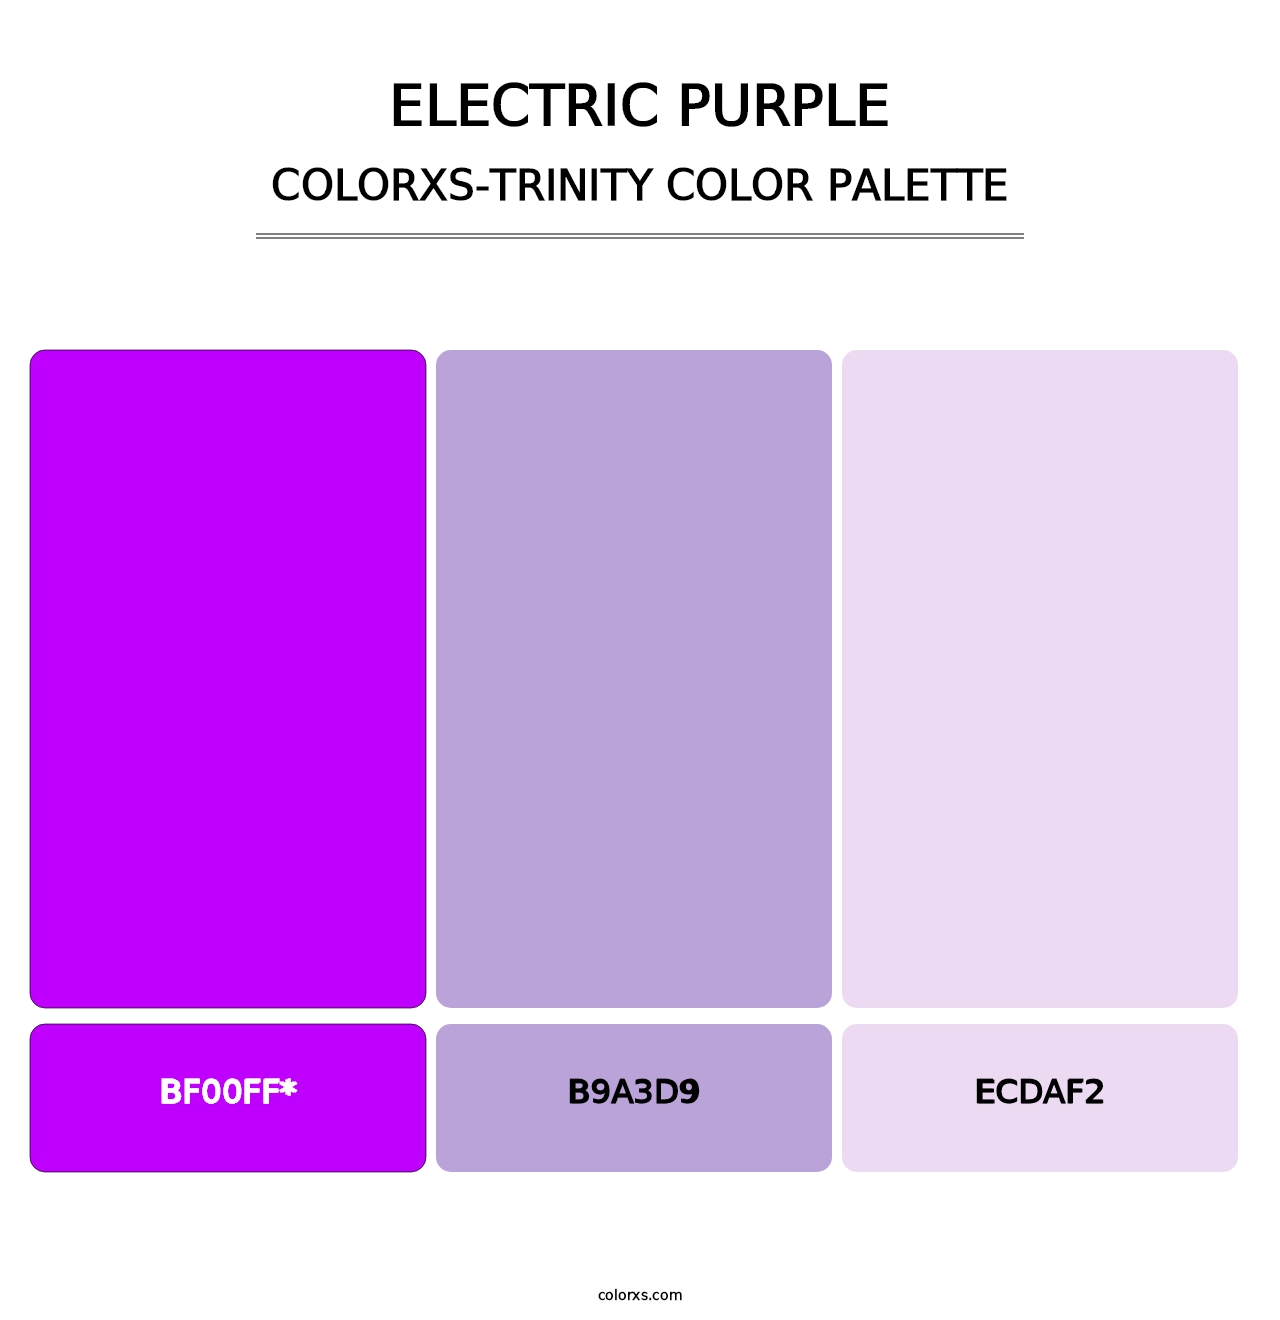 Electric Purple - Colorxs Trinity Palette